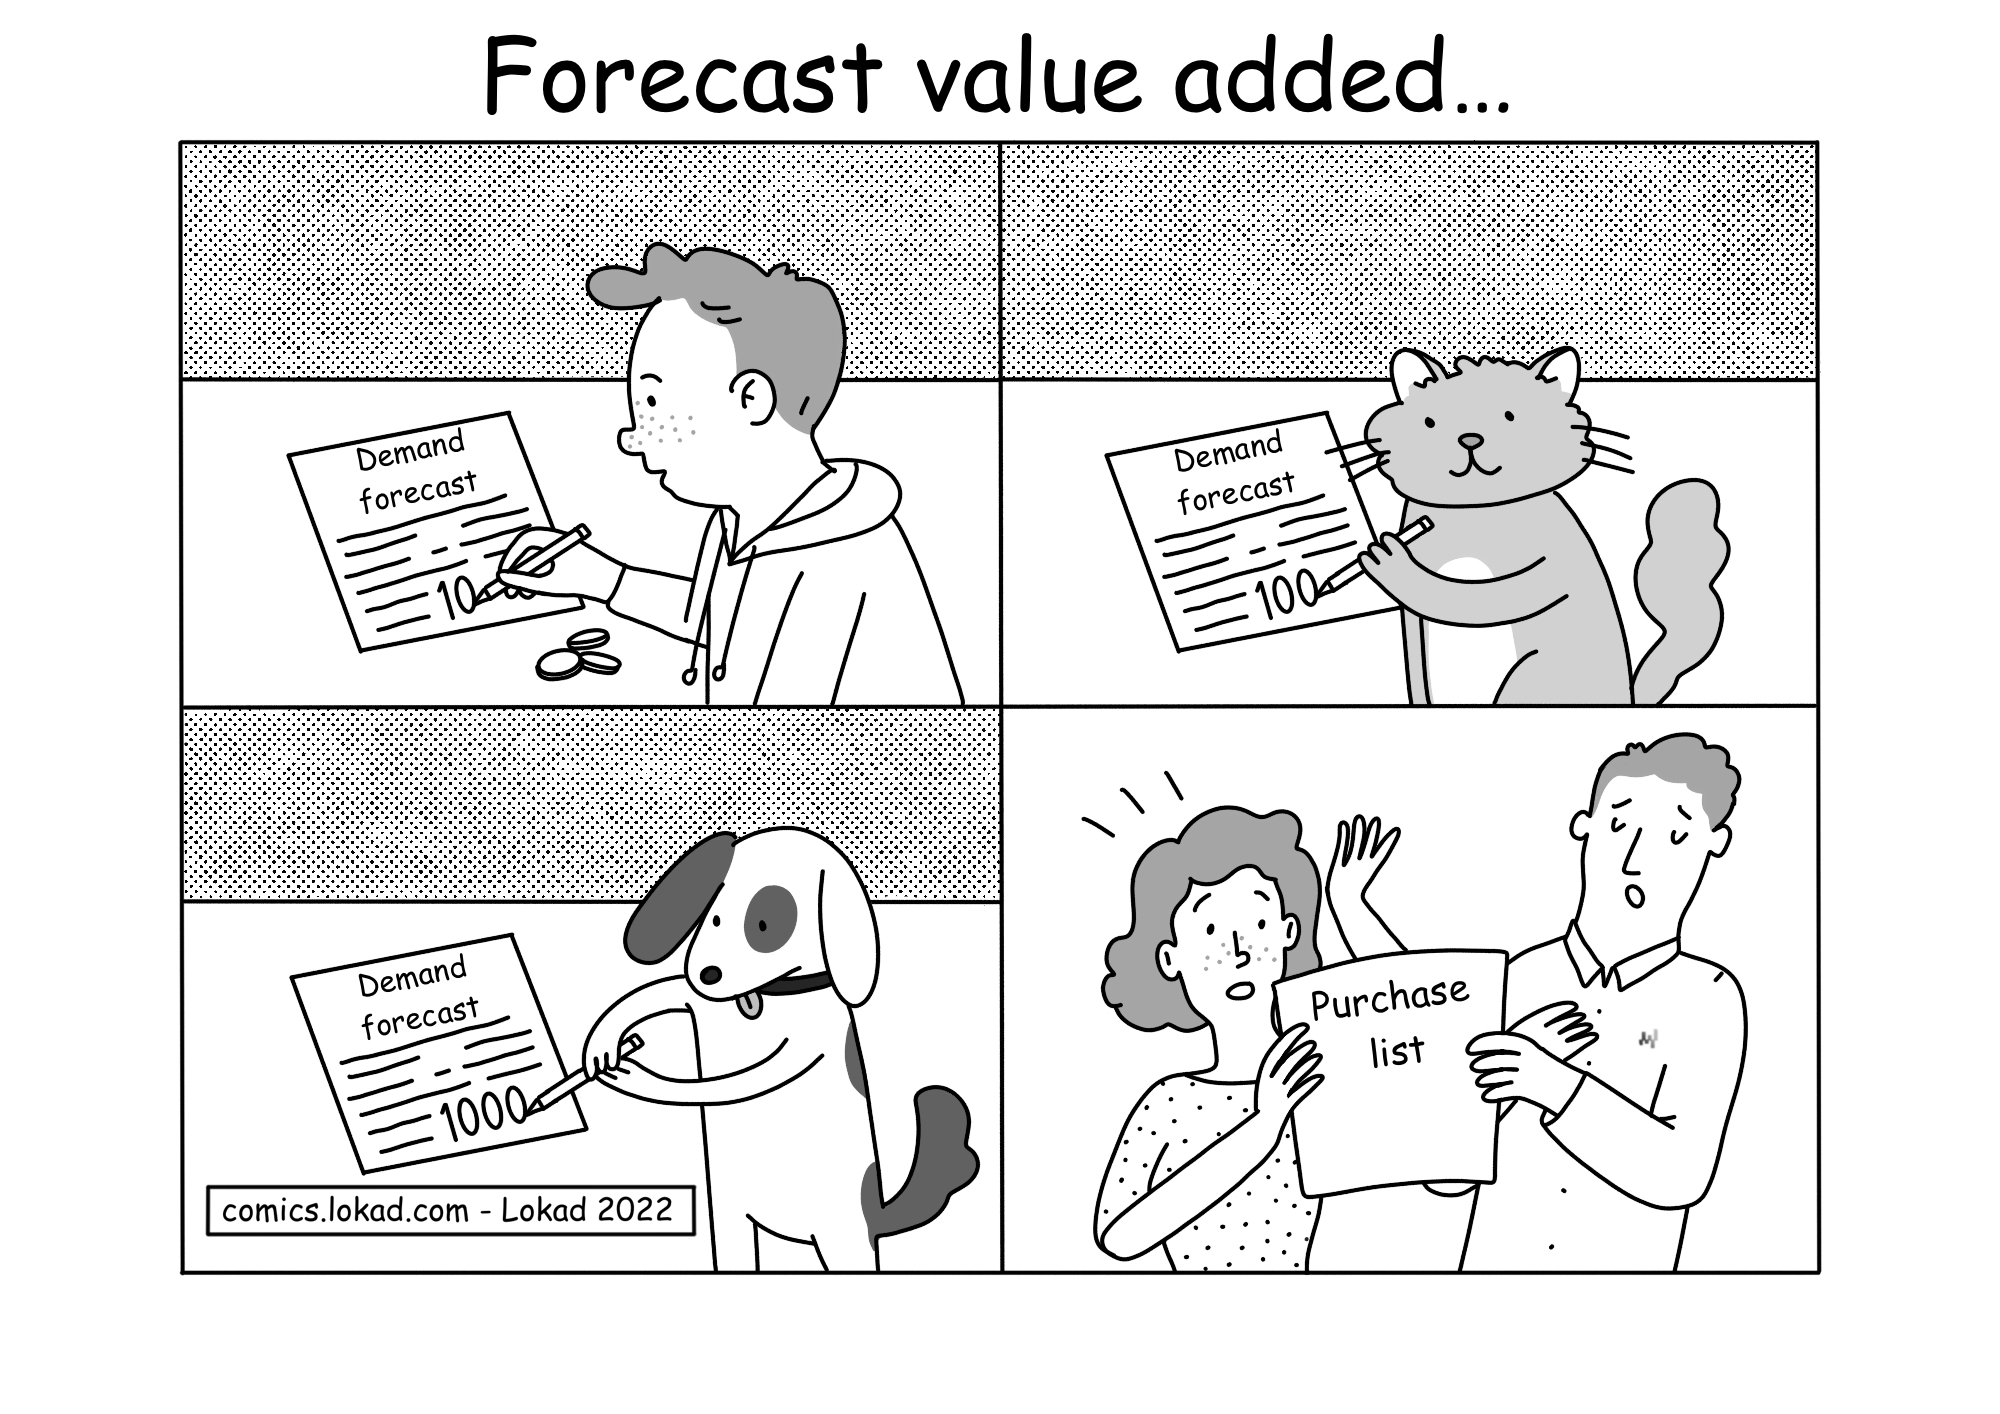 Forecast value added...